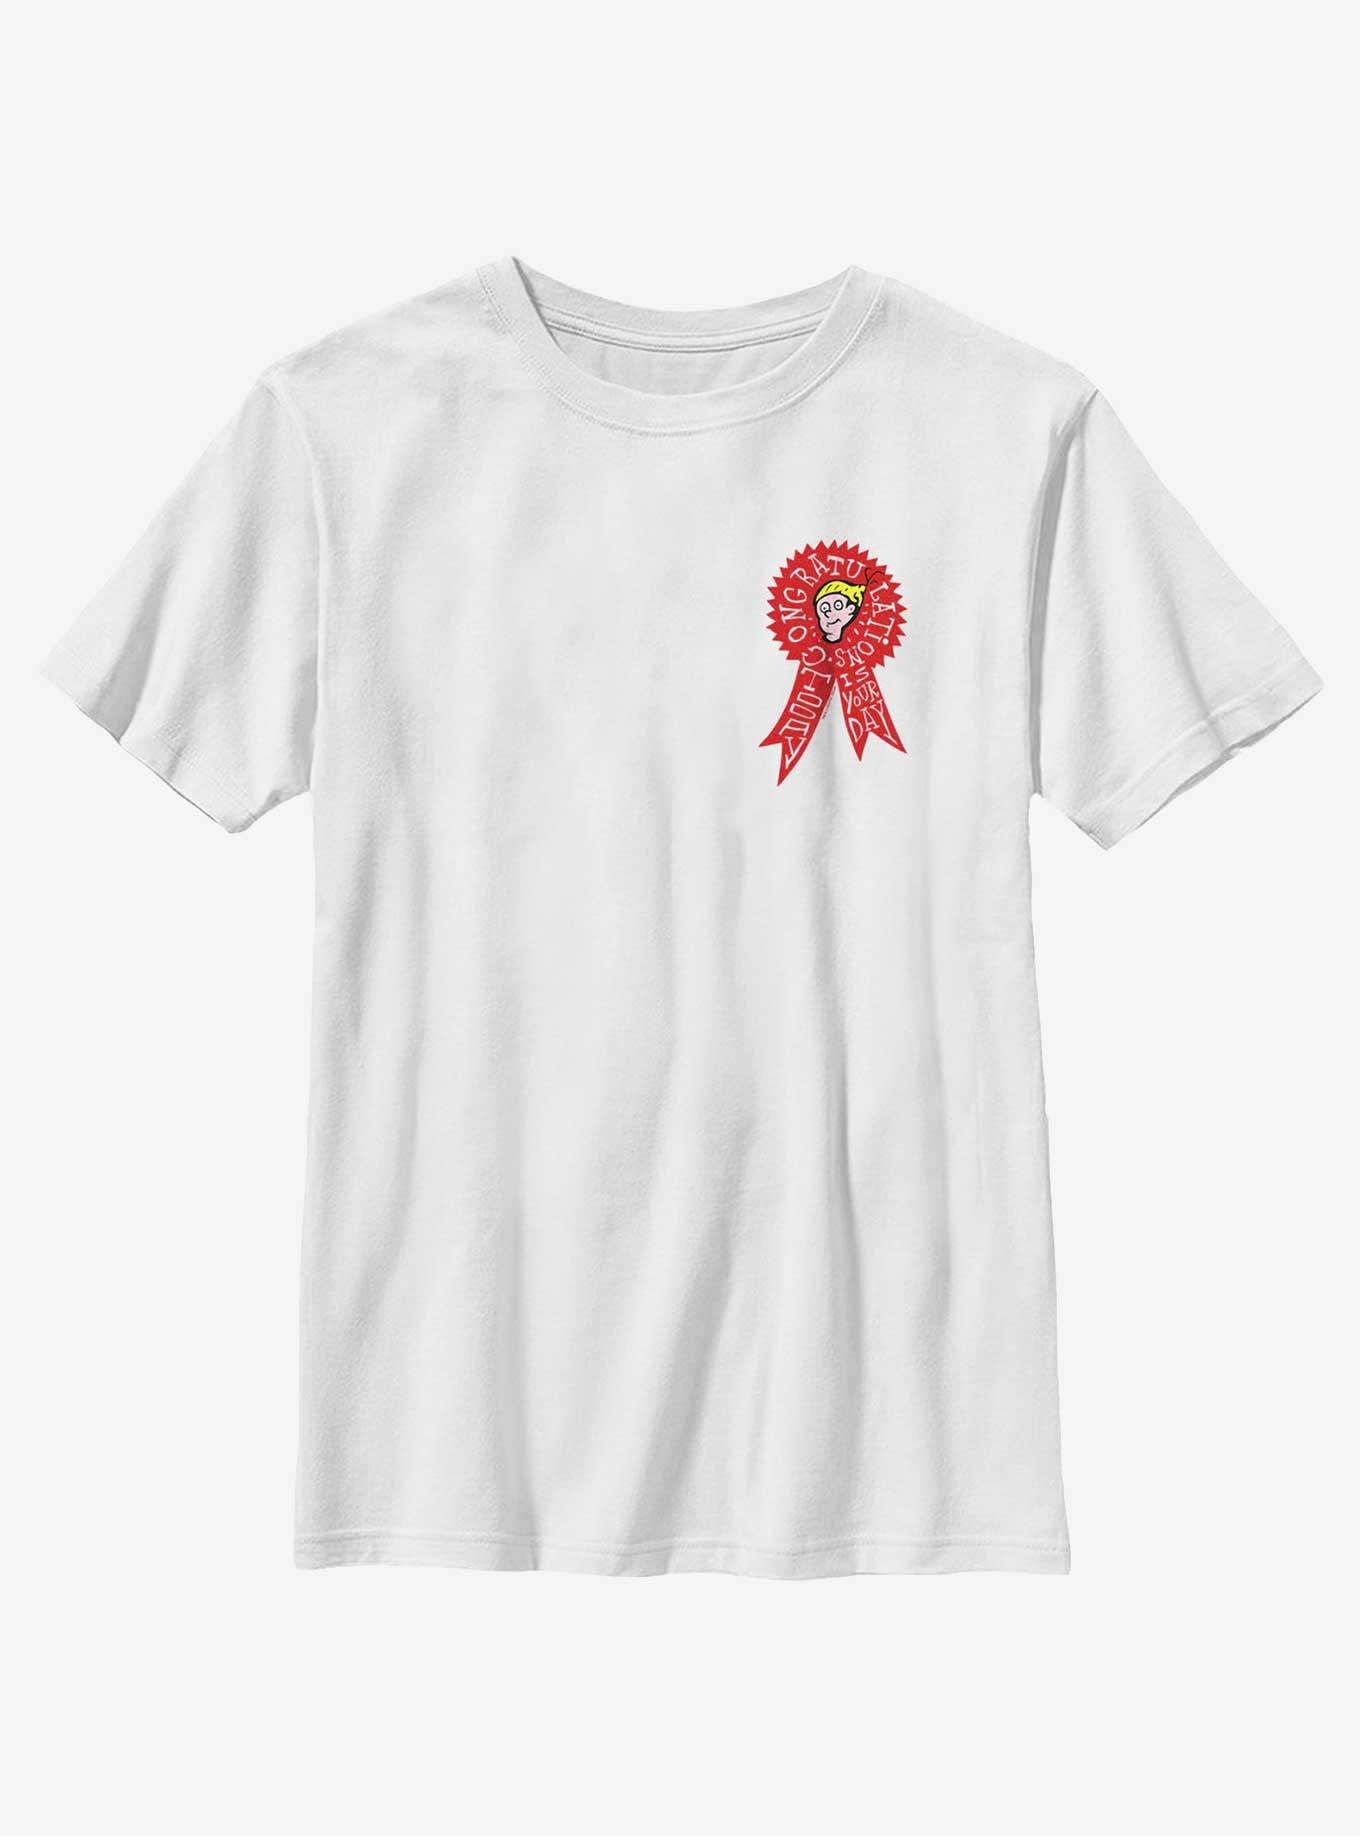 Dr. Seuss Congratulations Badge Youth T-Shirt, WHITE, hi-res